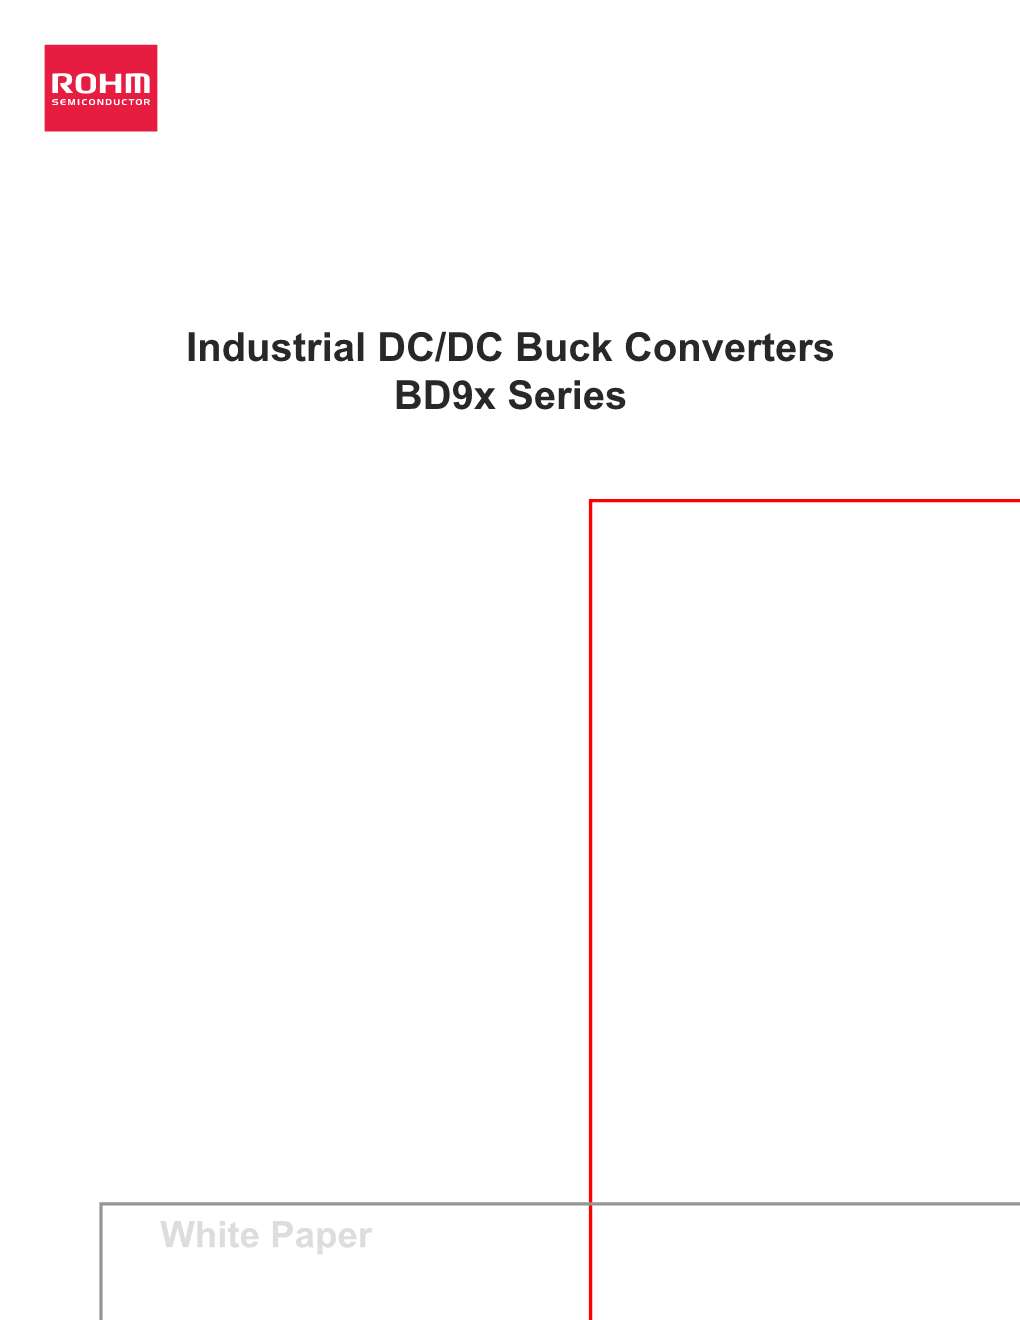 Industrial DC/DC Buck Converter Bd9x Series : Power Management